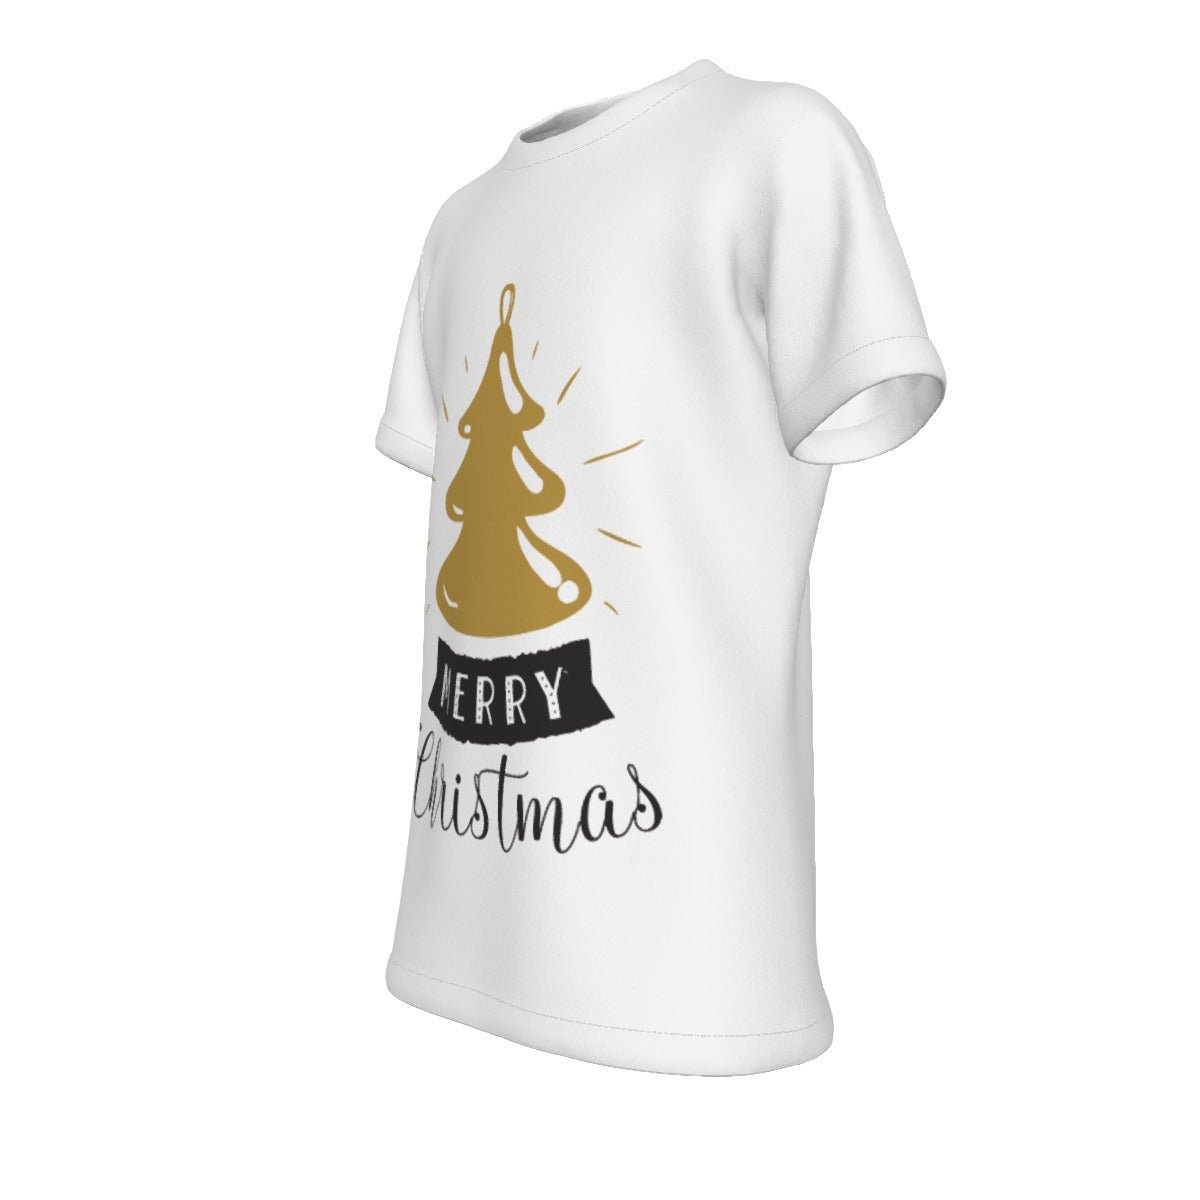 Kid's Christmas T-Shirt - Merry Christmas - Gold Tree - Festive Style